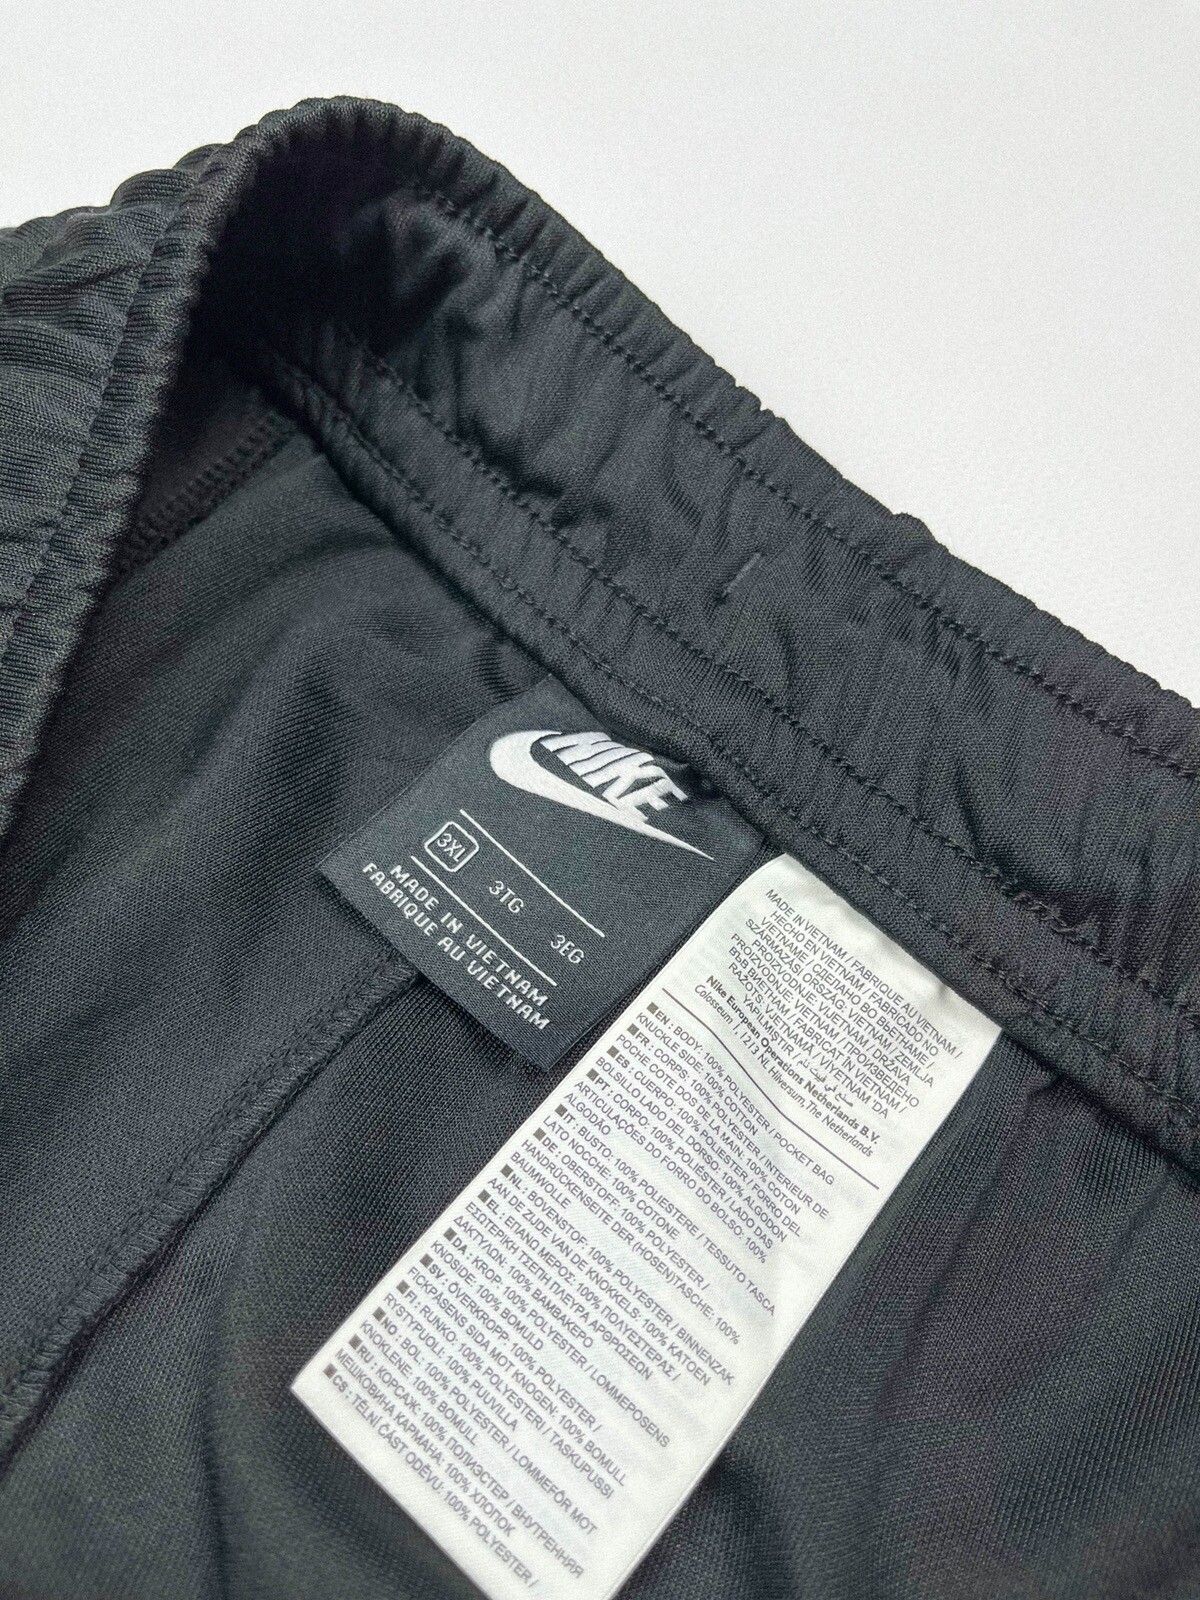 Nike Nike Trackpants Full Side Snap Pants 3XL Size US 40 / EU 56 - 4 Preview